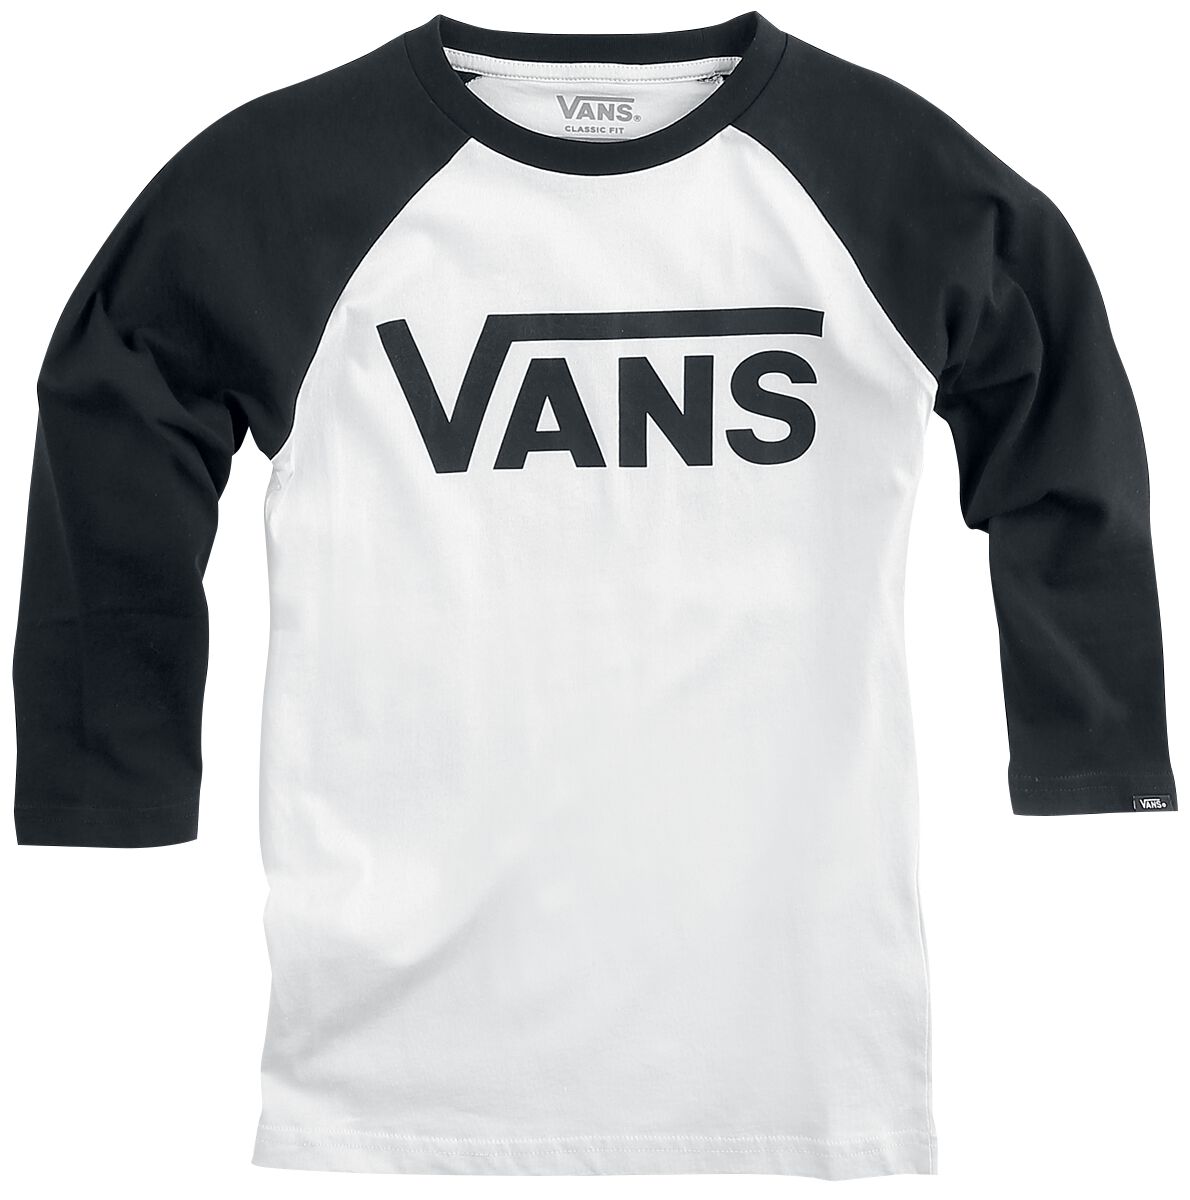 Vans Kids - BY VANS Classic Raglan - Langarmshirt - schwarz|weiß